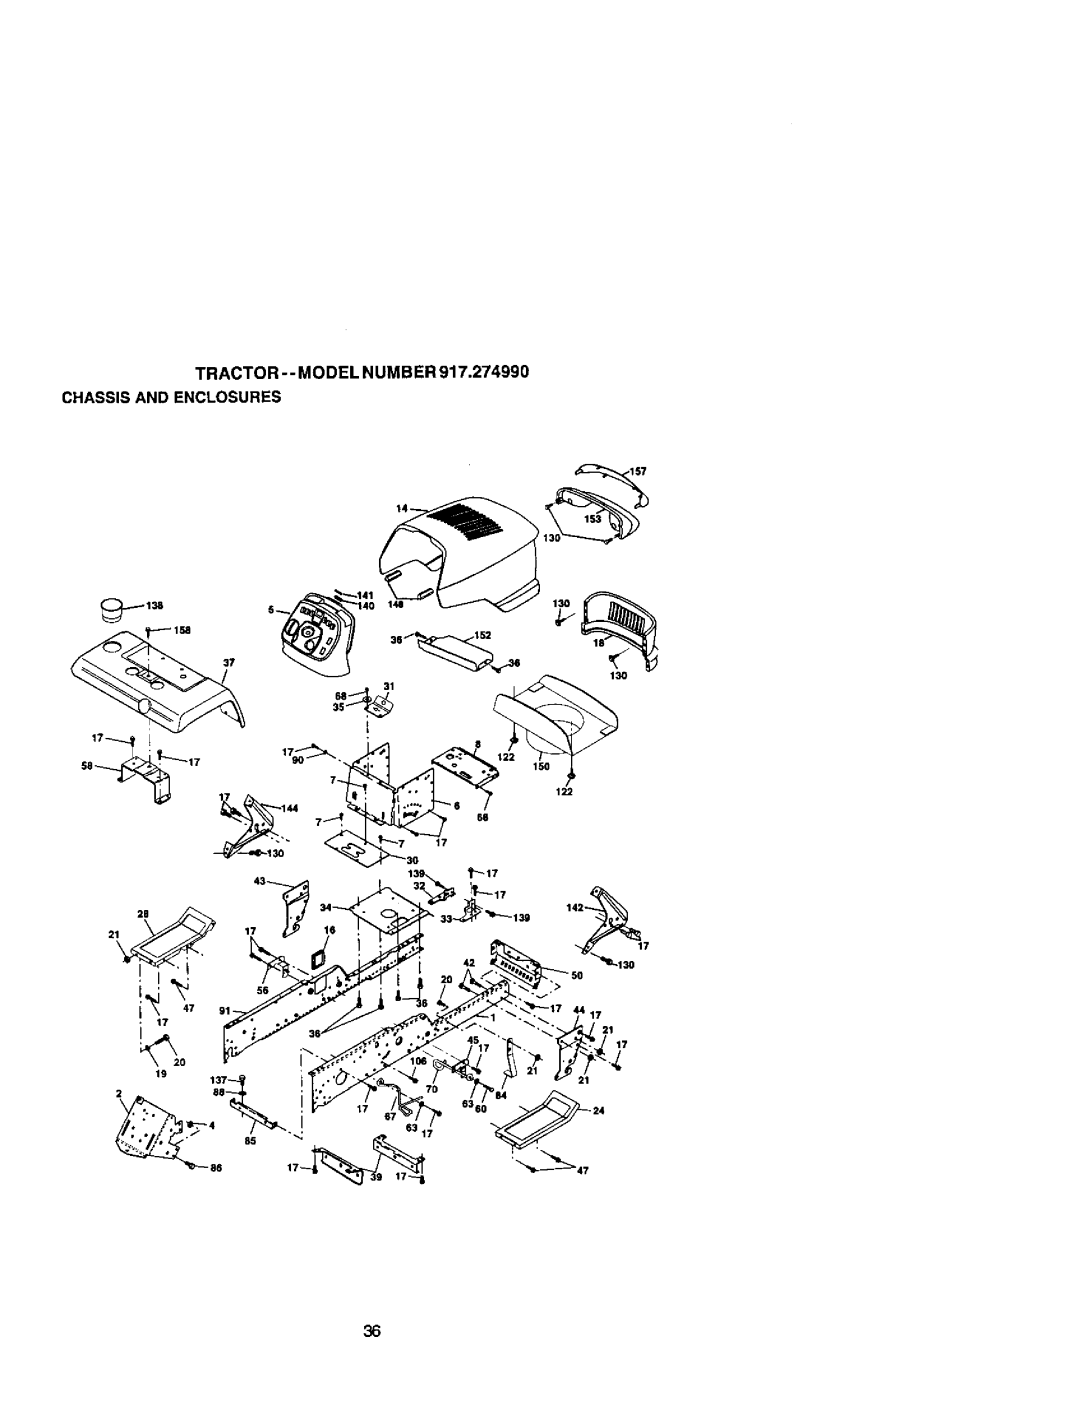 Craftsman manual TRACTOR--MODELNUMBER917.274990, Chassisandenclosures 